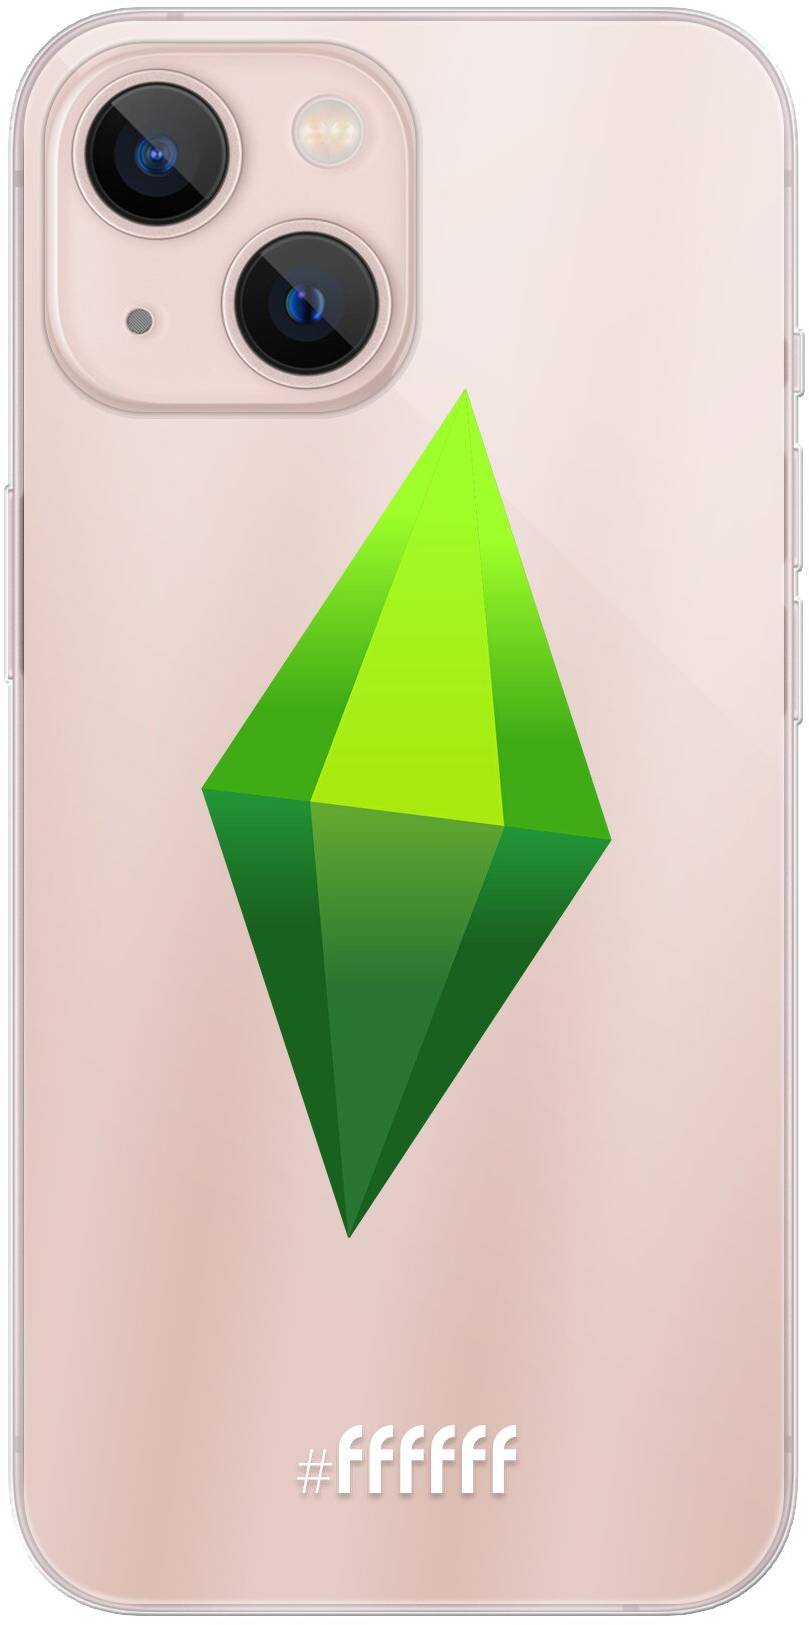 The Sims iPhone 13 Mini